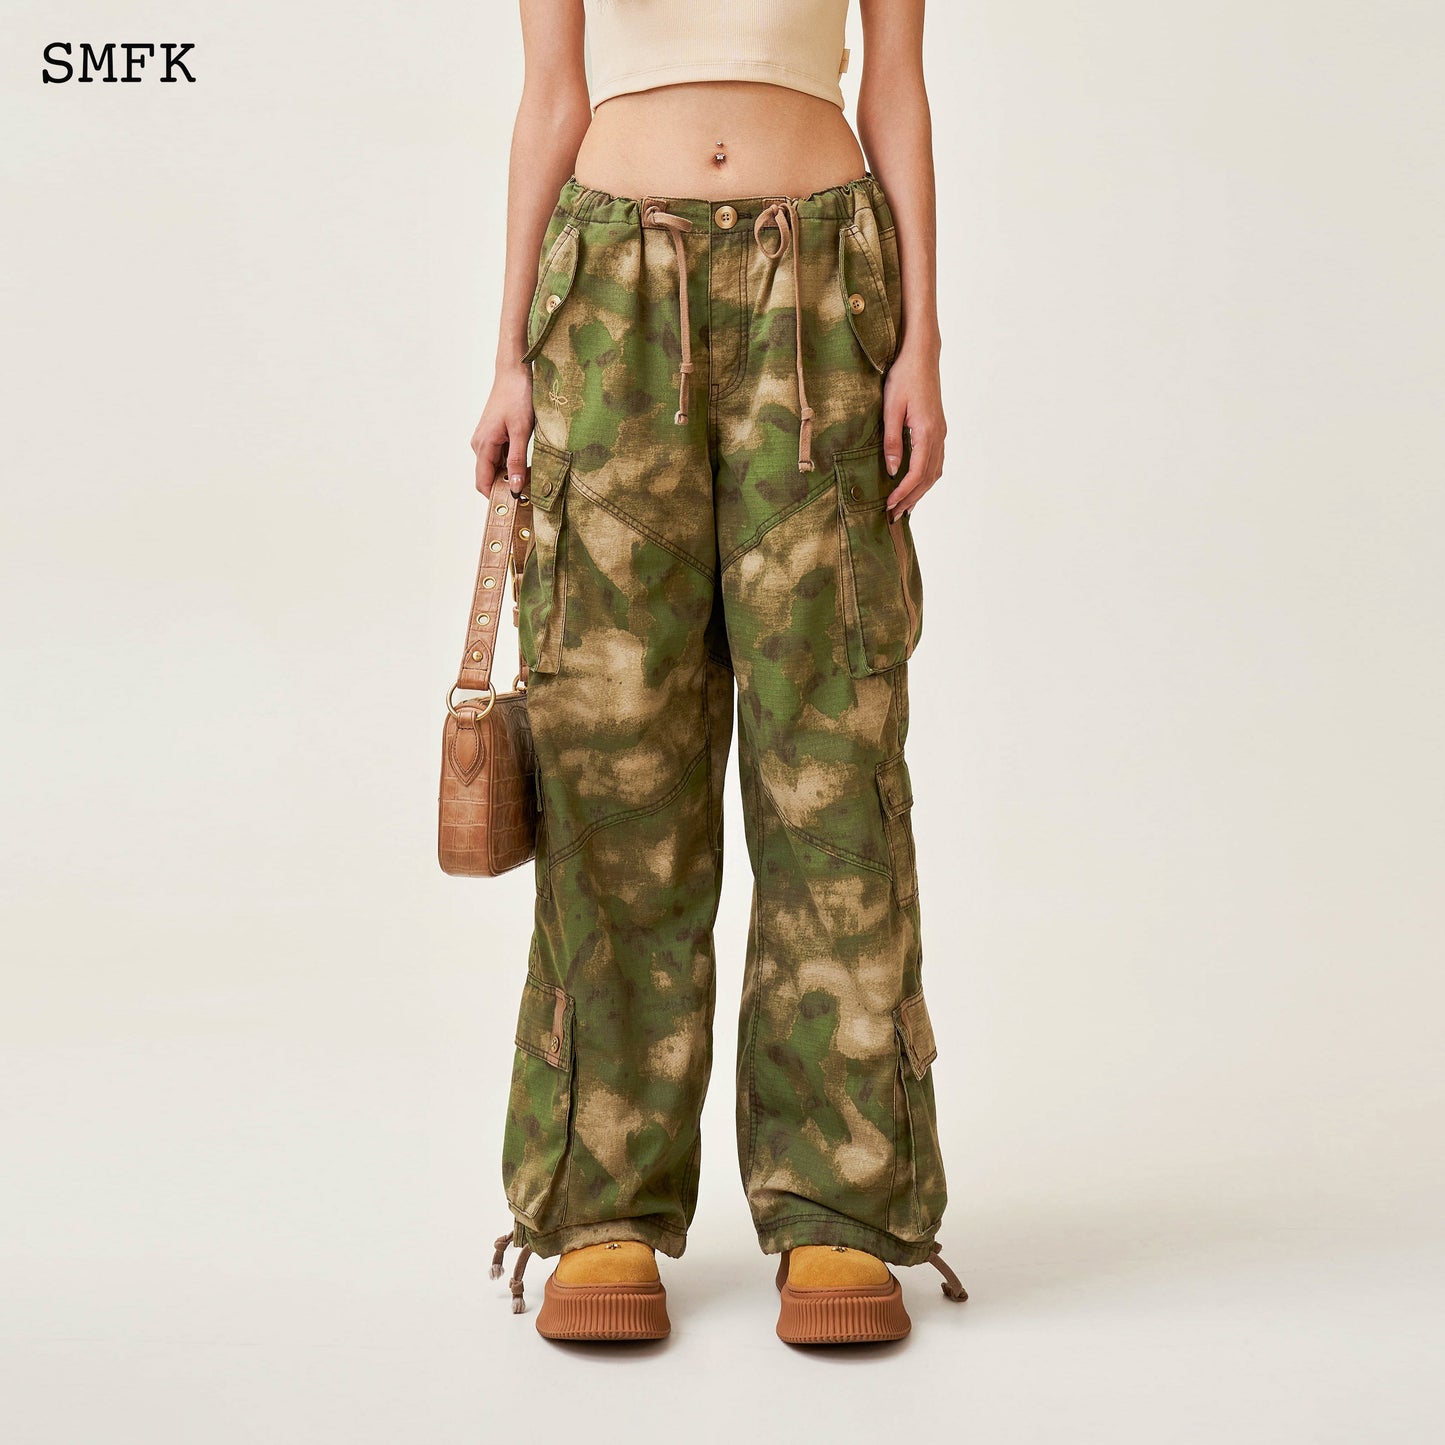 SMFK Compass Cobra Camouflage Paratrooper Pants